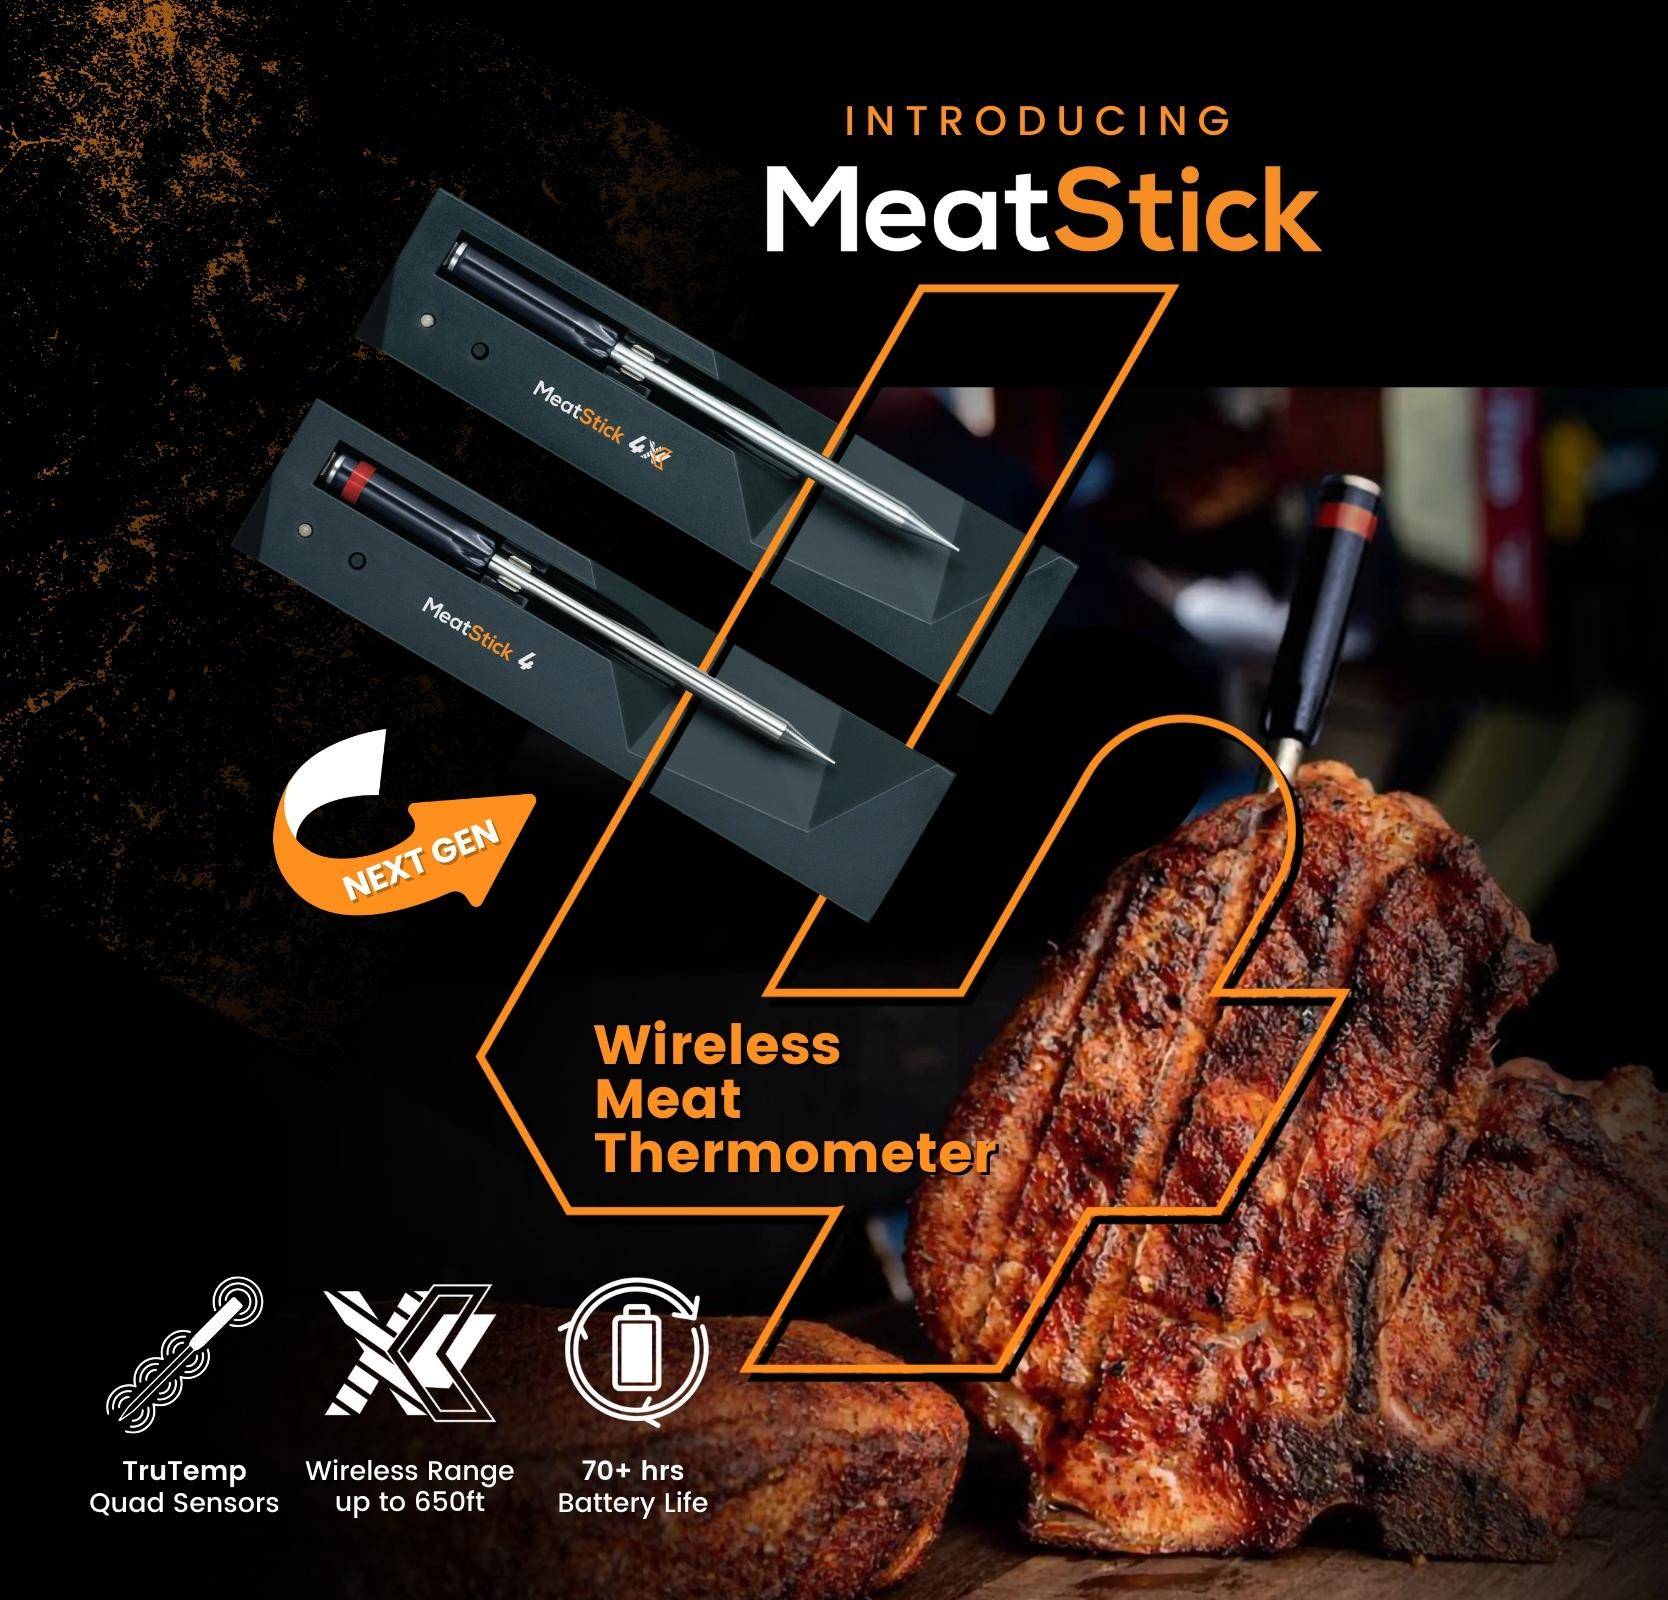 Introducing MeatStick 4 Next Gen Quad Sensors Wireless Meat Thermometer